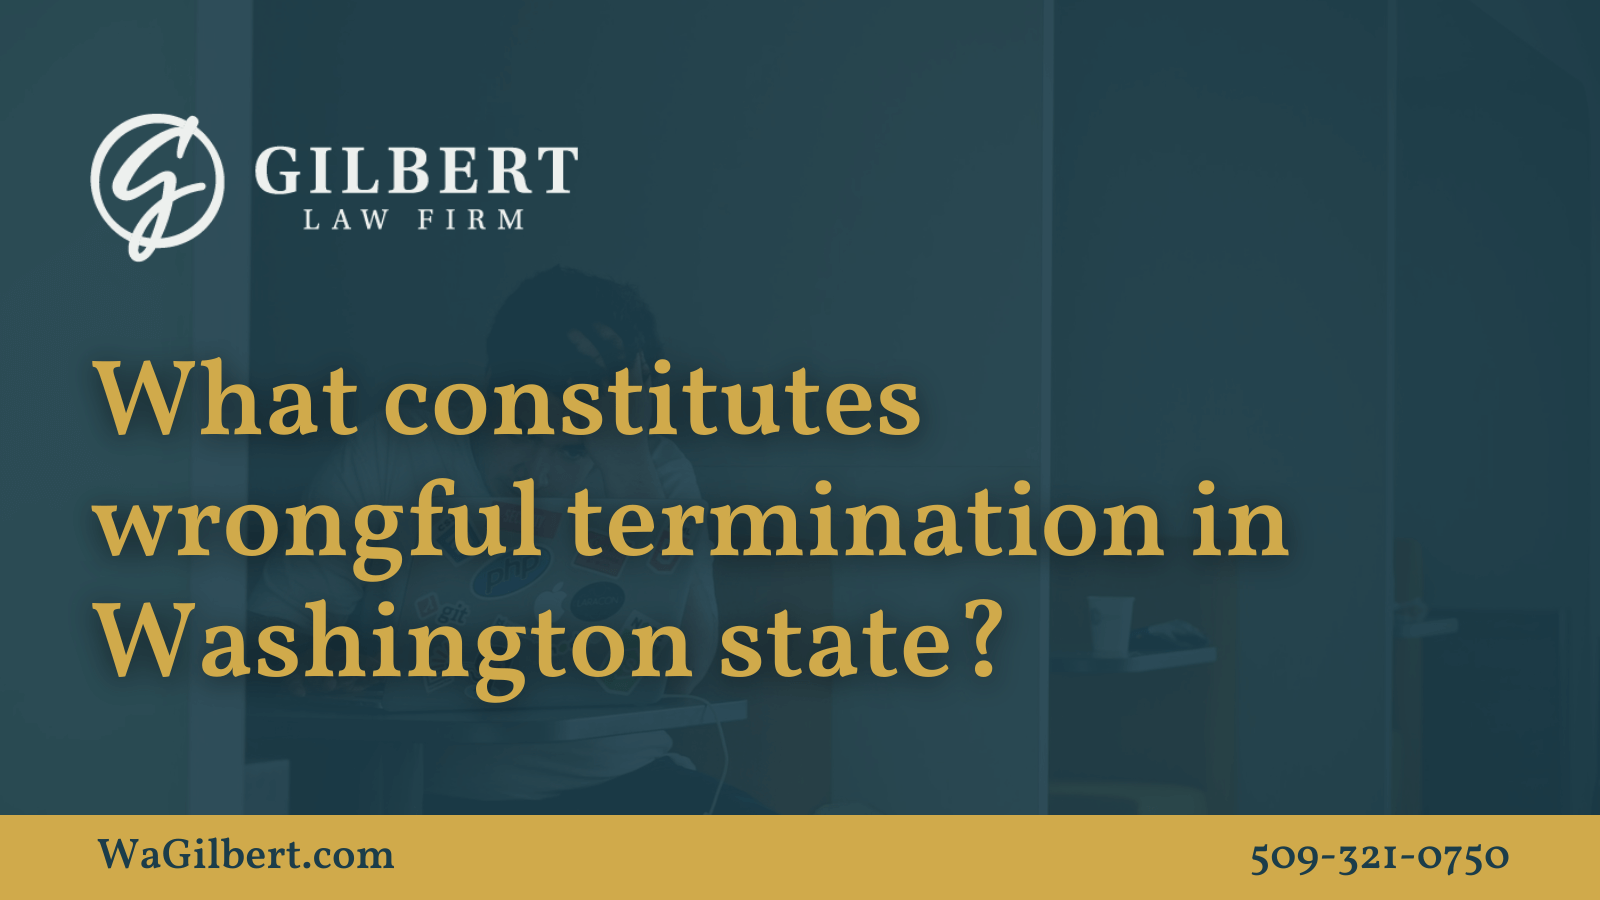 What Constitutes Wrongful Termination in Washington State ? - Gilbert Law Firm Spokane Washington